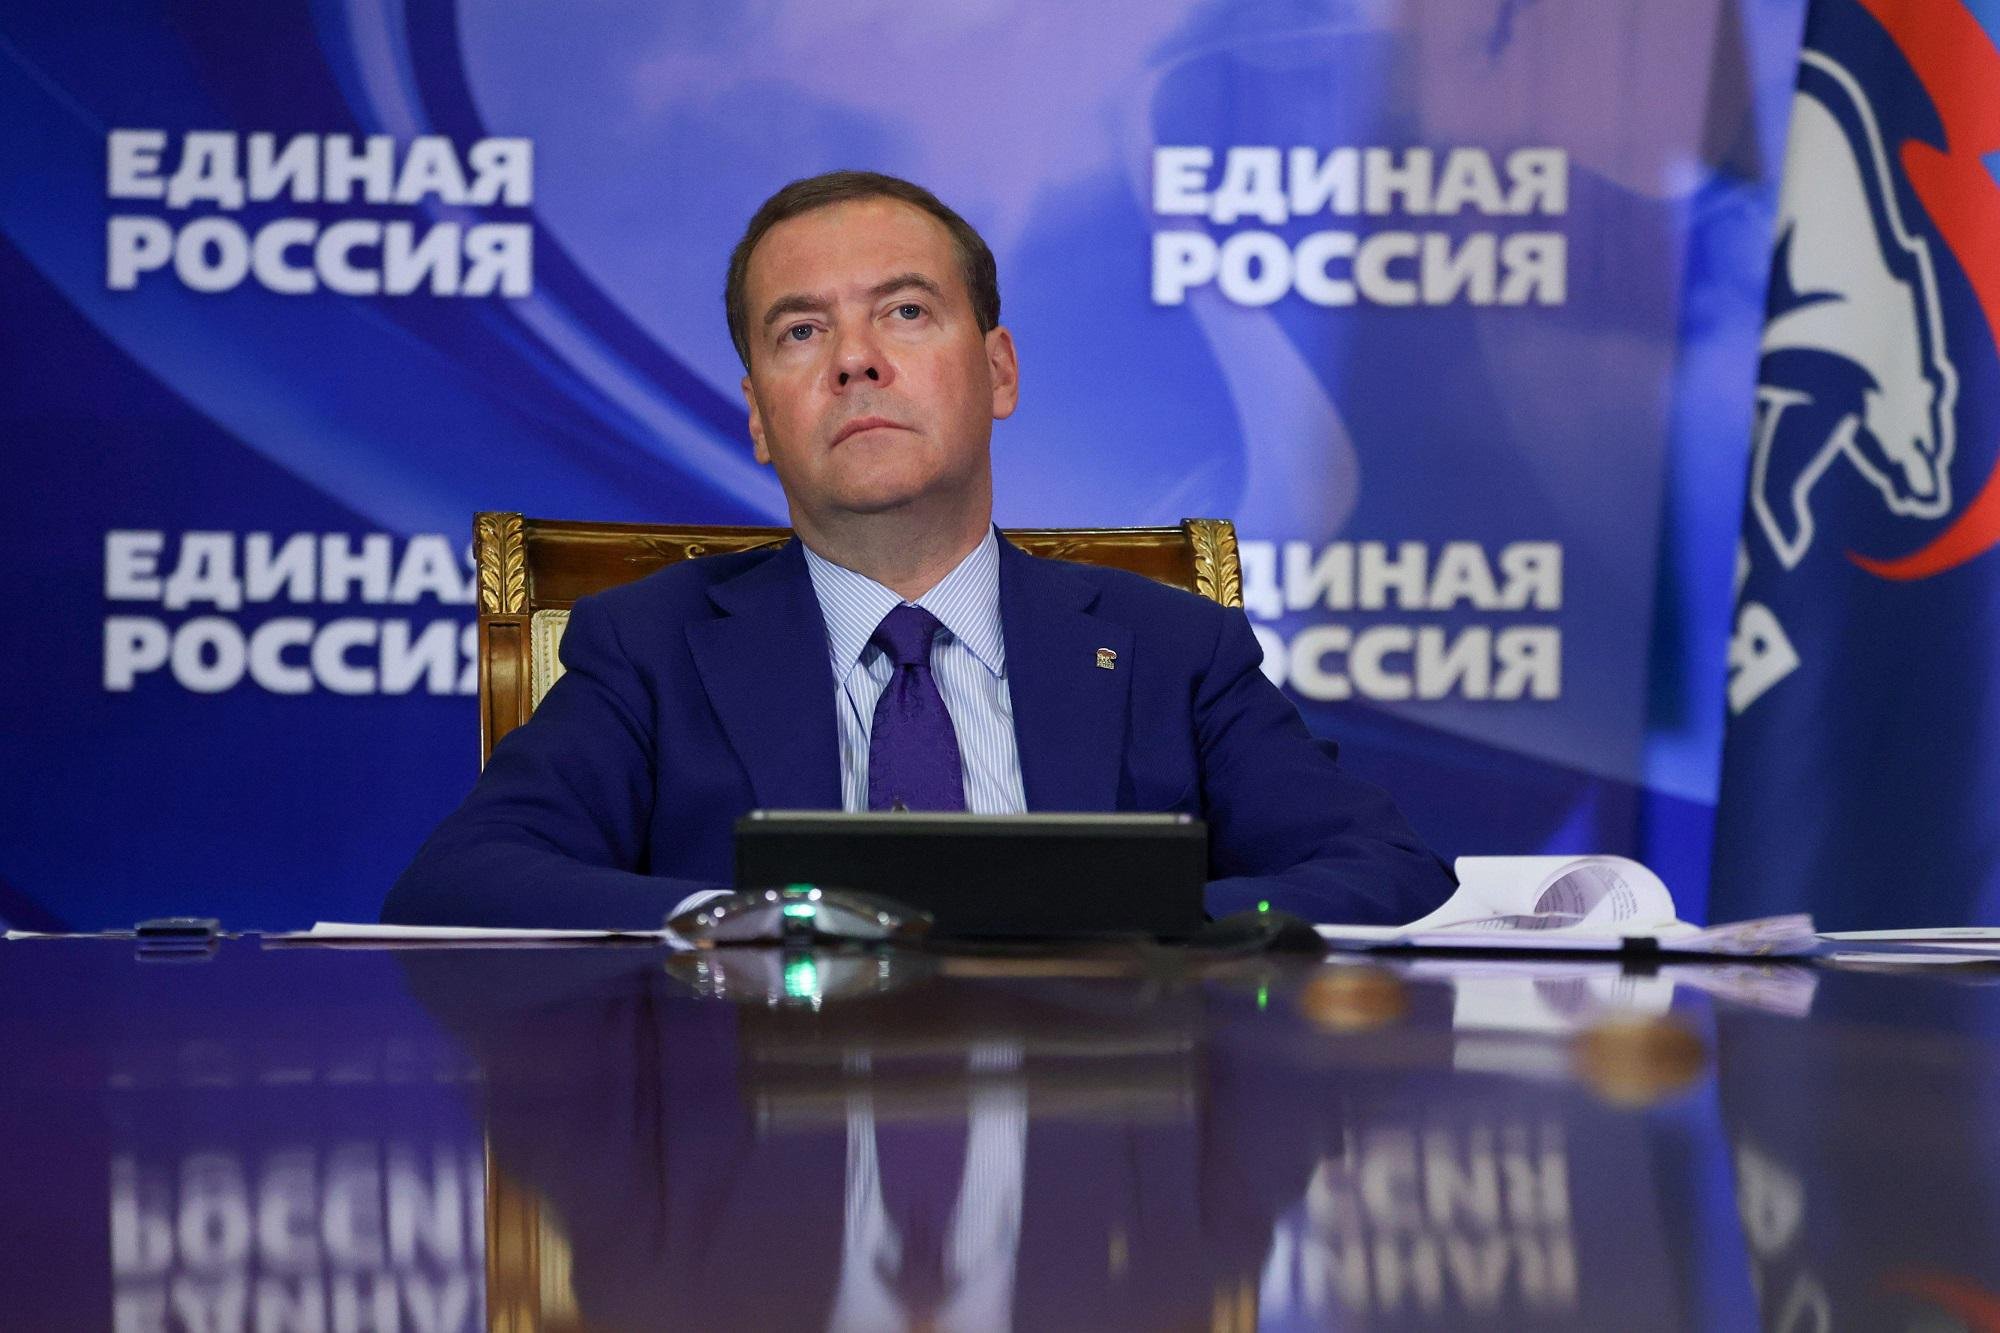 Ucraina, Medvedev: "Apocalisse nucleare è probabile"